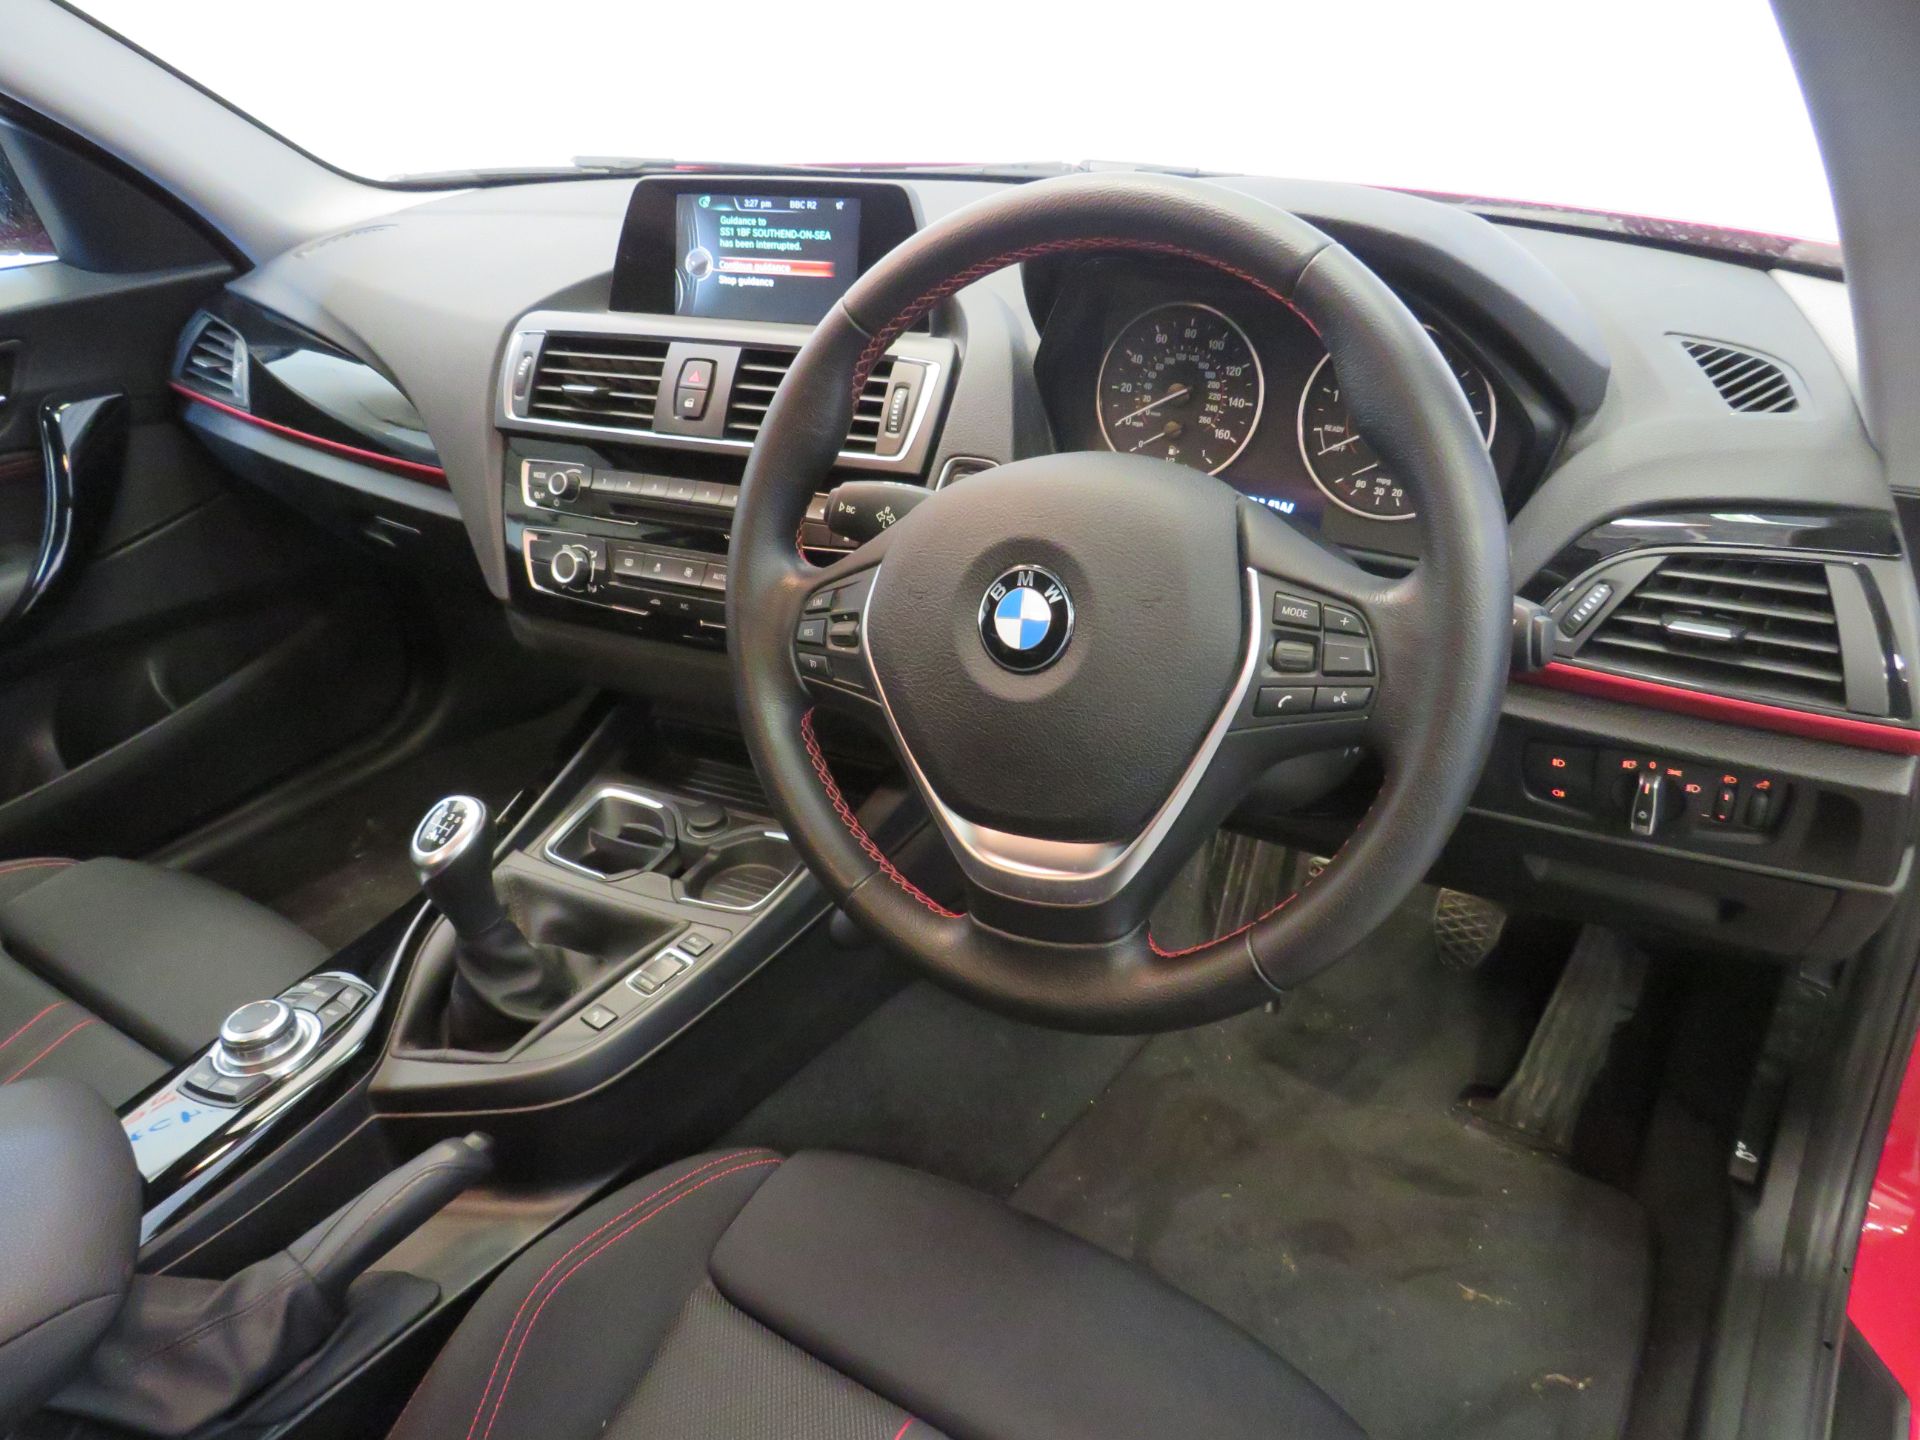 2015 BMW 118i Sport - 1499cc - Image 8 of 9